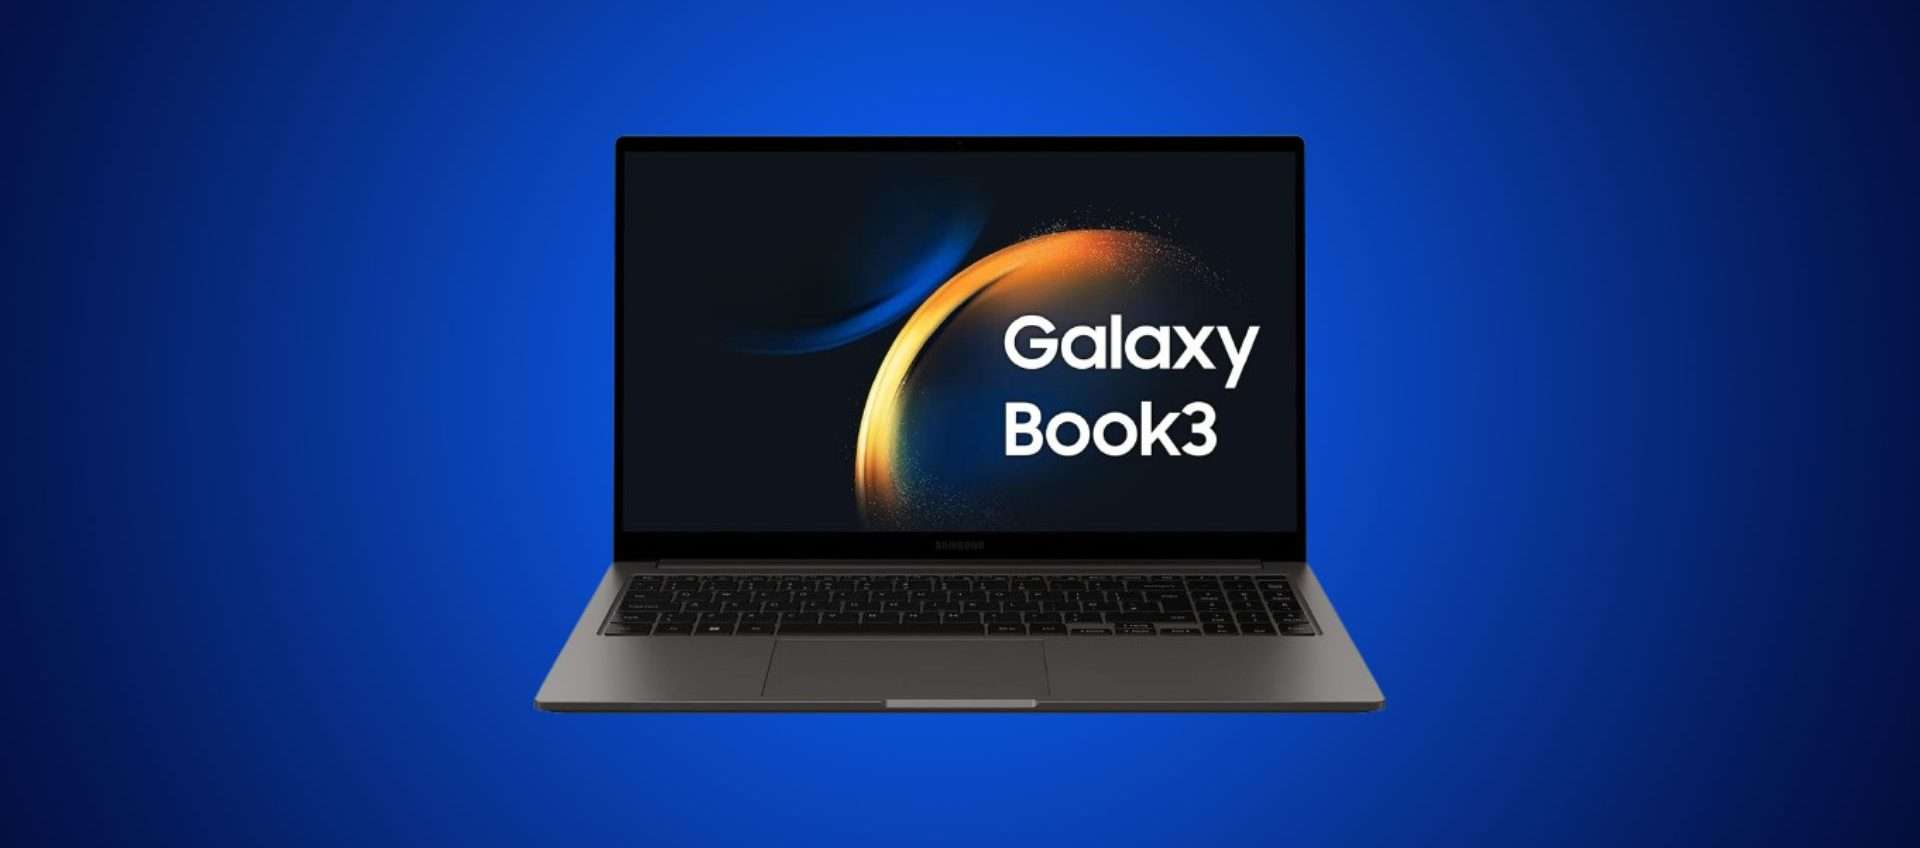 Samsung Galaxy Book3, offerta bomba: tuo a 522€ (Amazon)